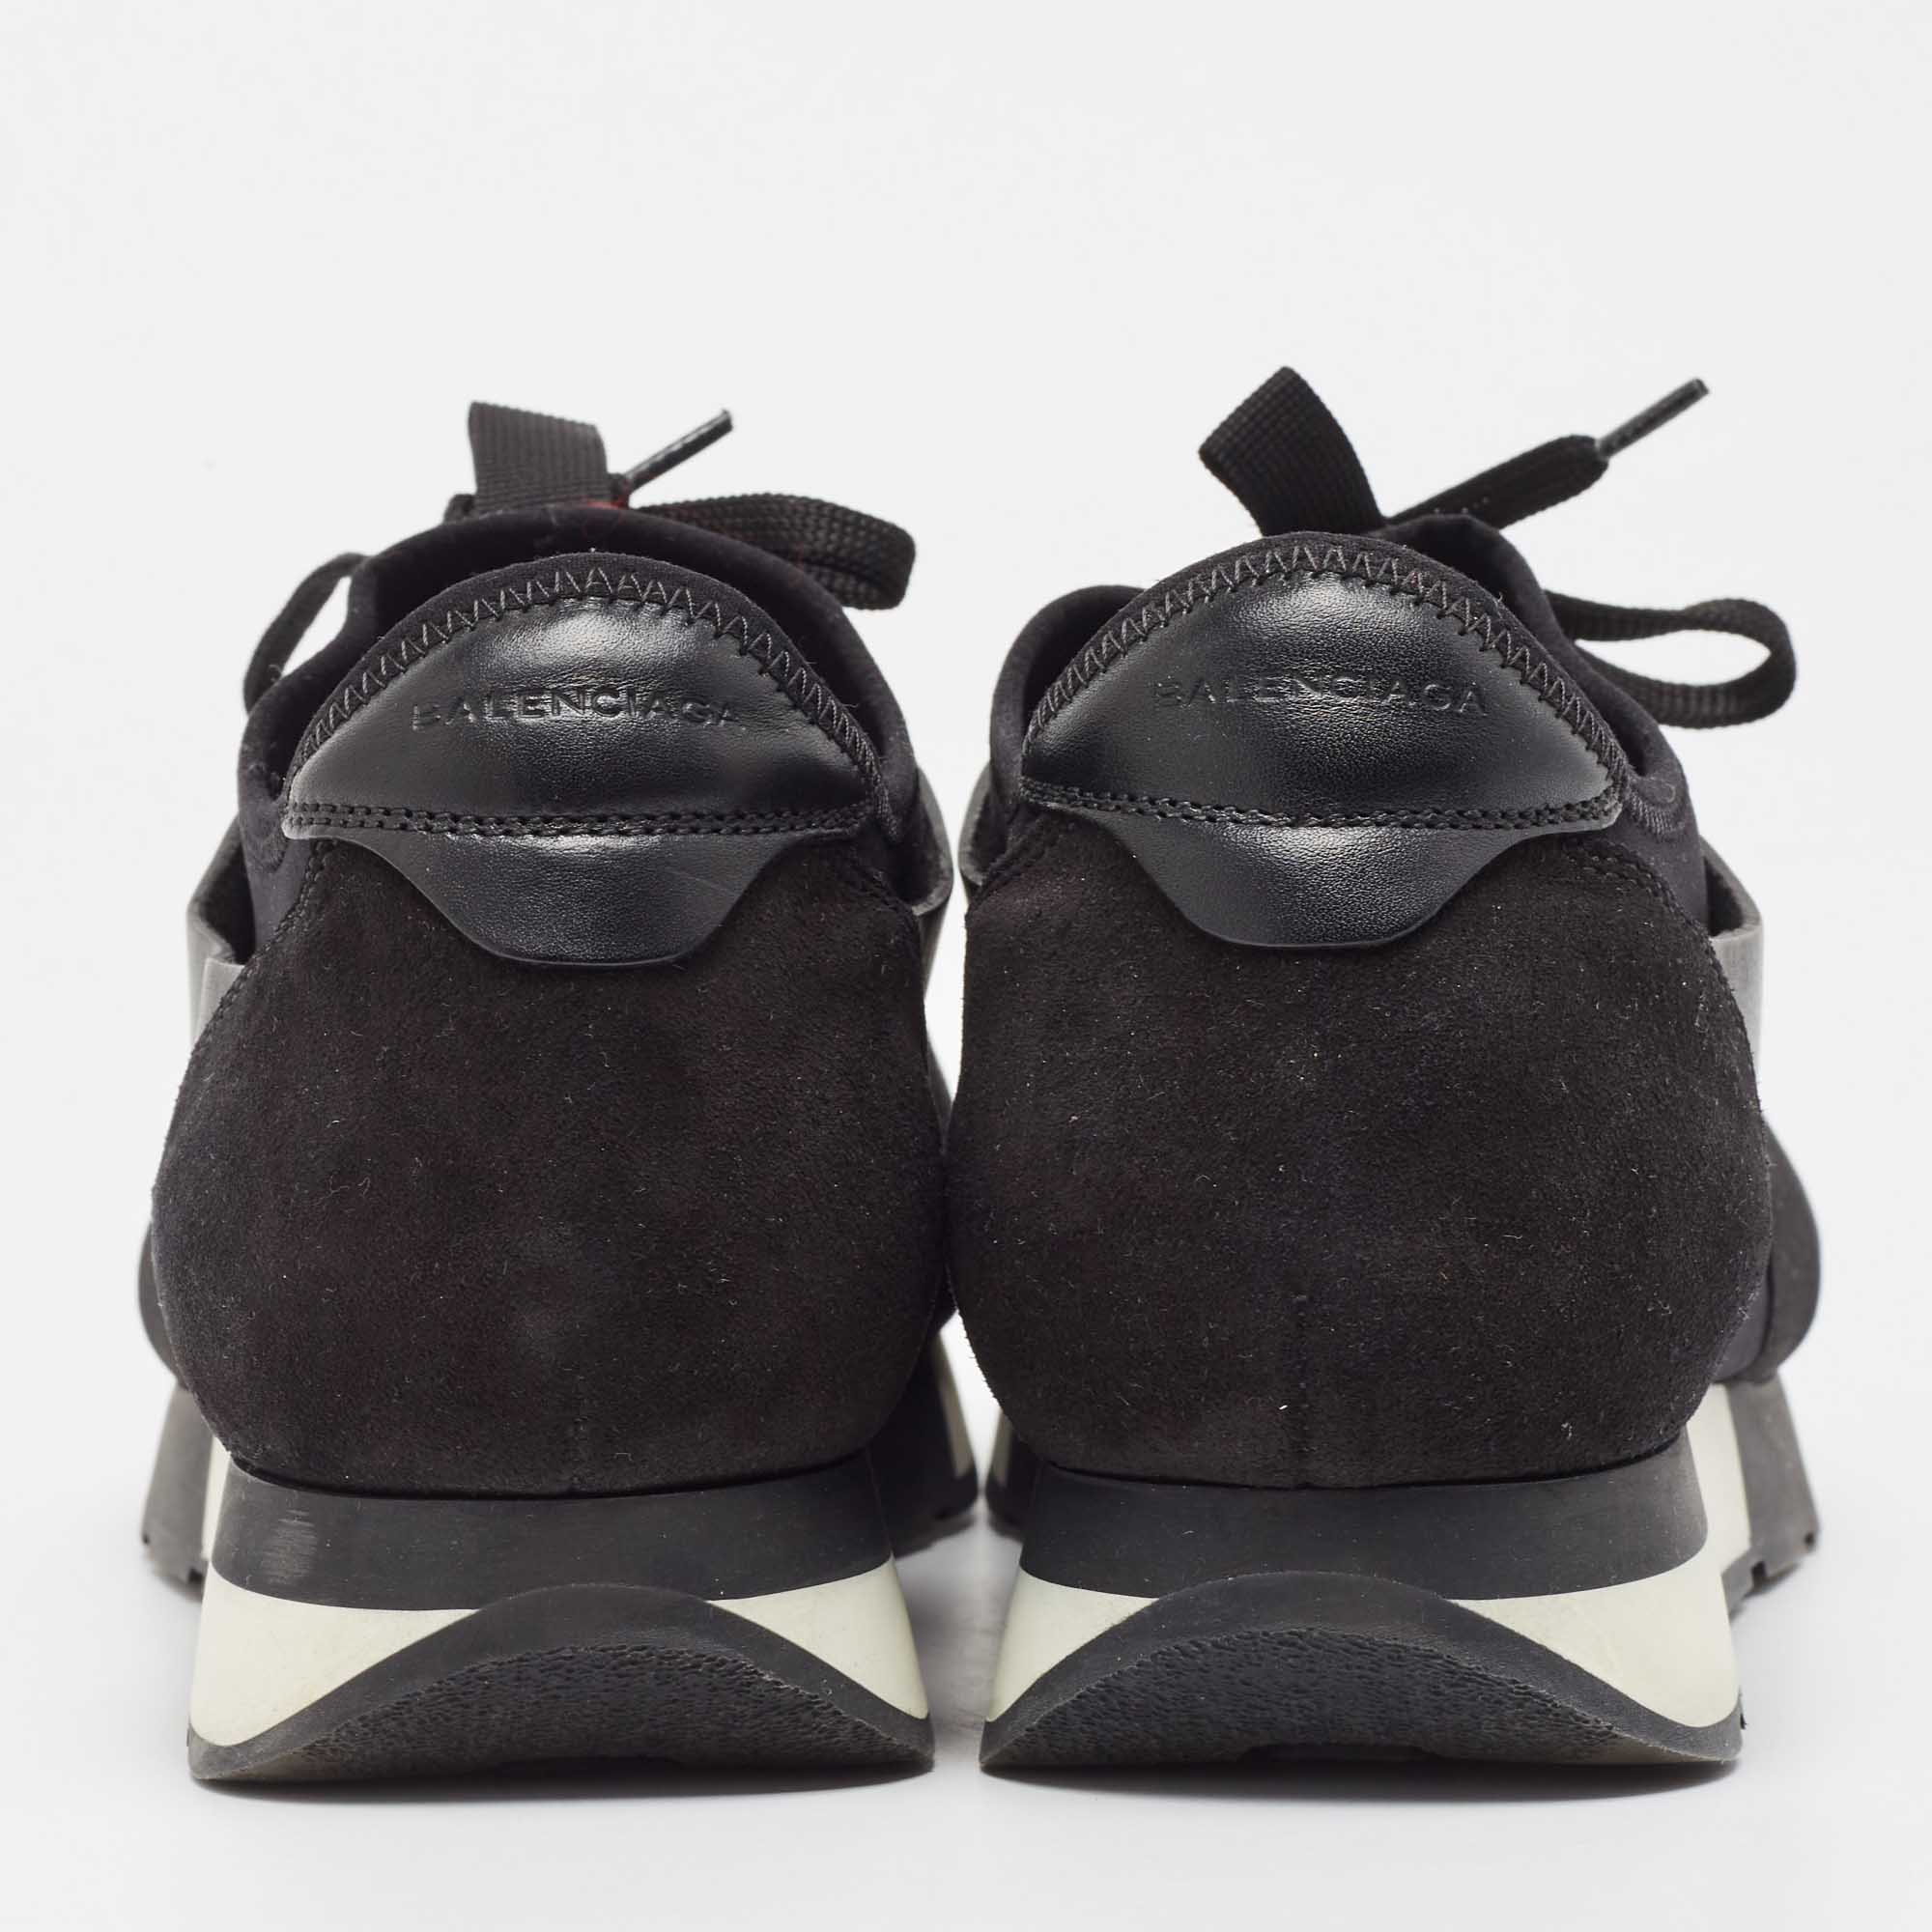 Balenciaga Black Leather, Mesh Race Runner  Sneakers Size 42